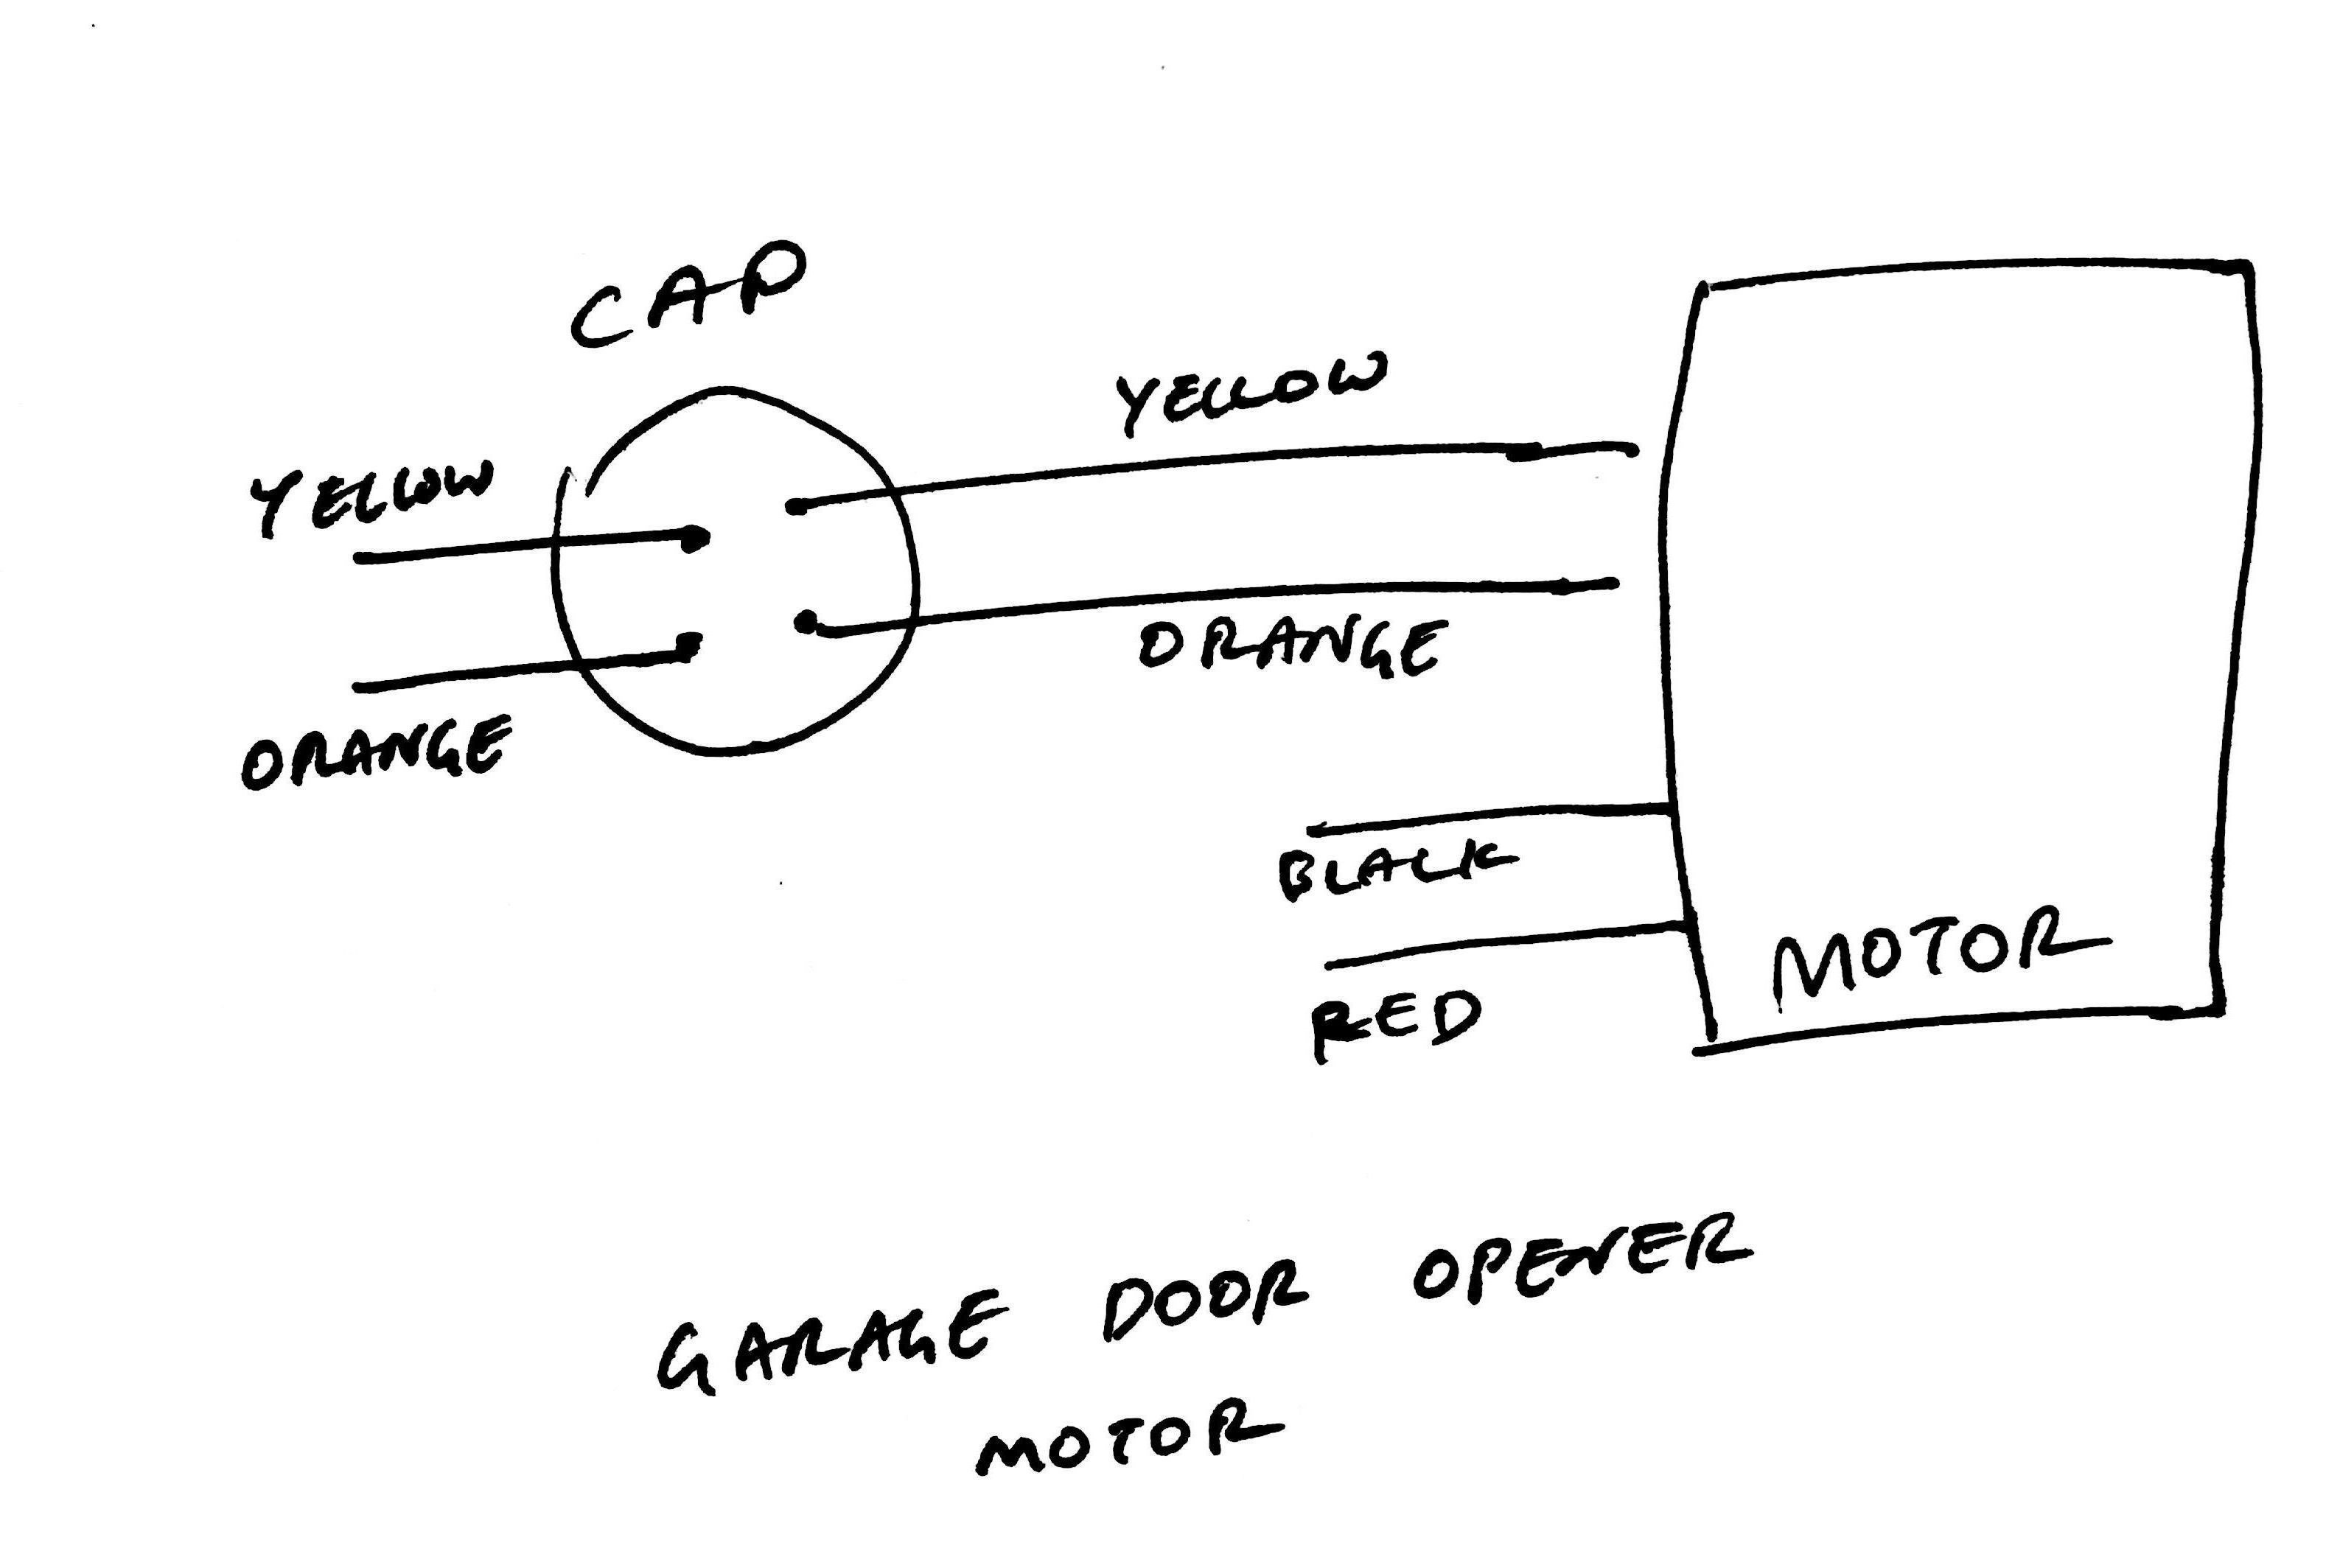 Dual Capacitor Wiring Diagram Lovely Wiring Diagram for Ac Capacitor New Ac Wiring Diagram Marvellous Ac